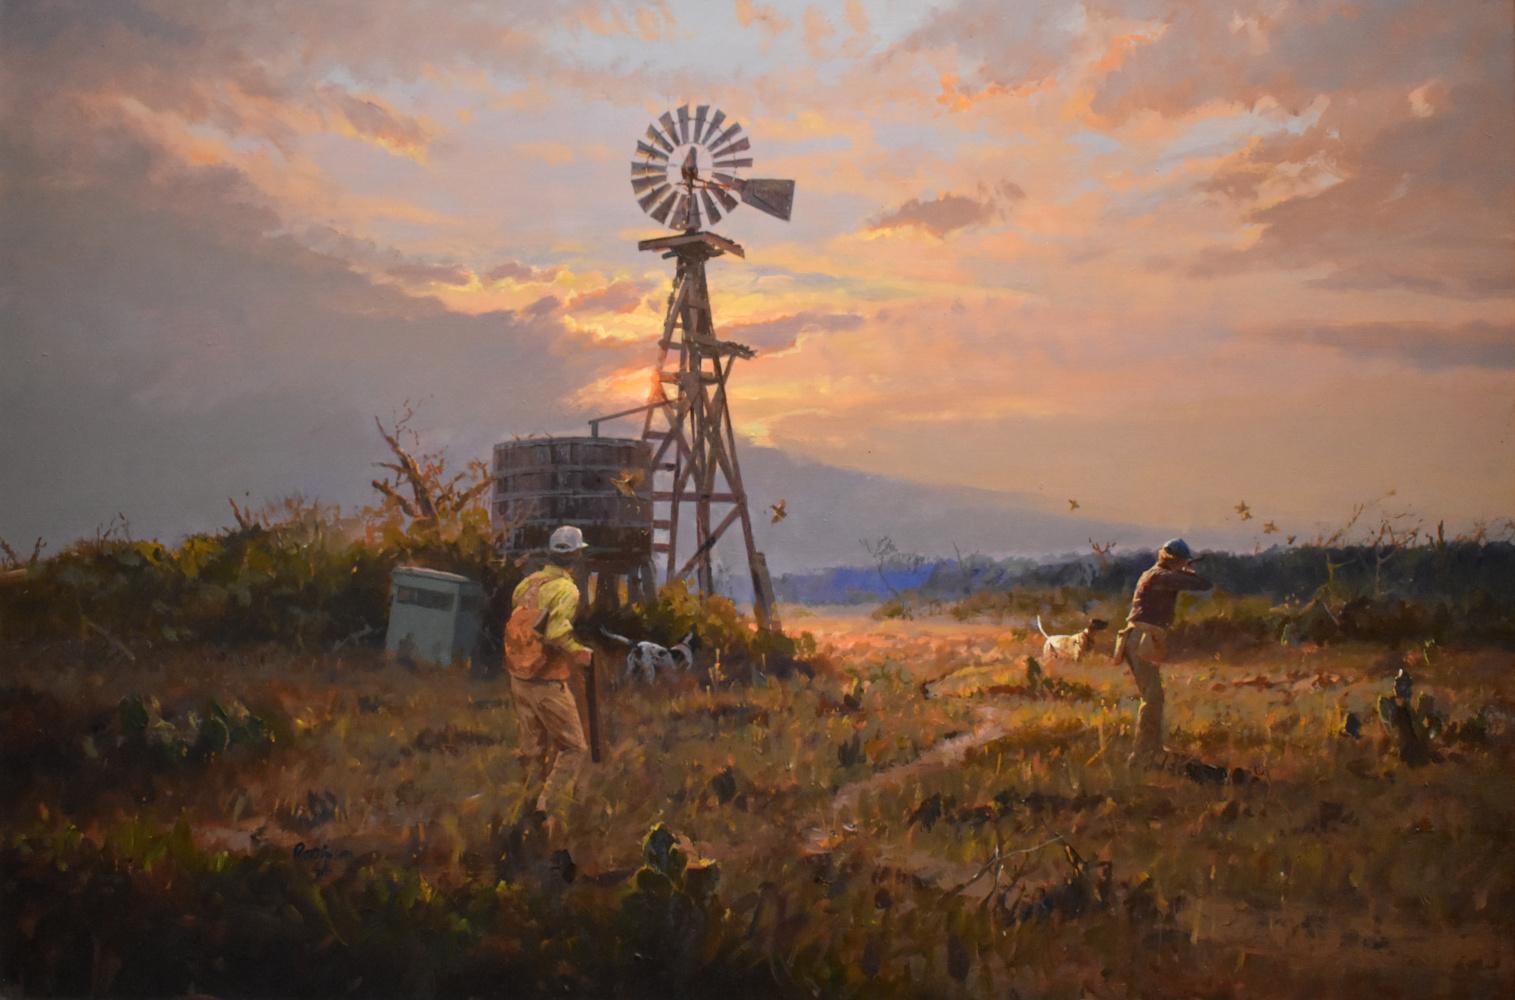 James Robinson Landscape Painting - "THE LAST SHOT" JAMES ROBINSON TEXAS WESTERN LANDSCAPE